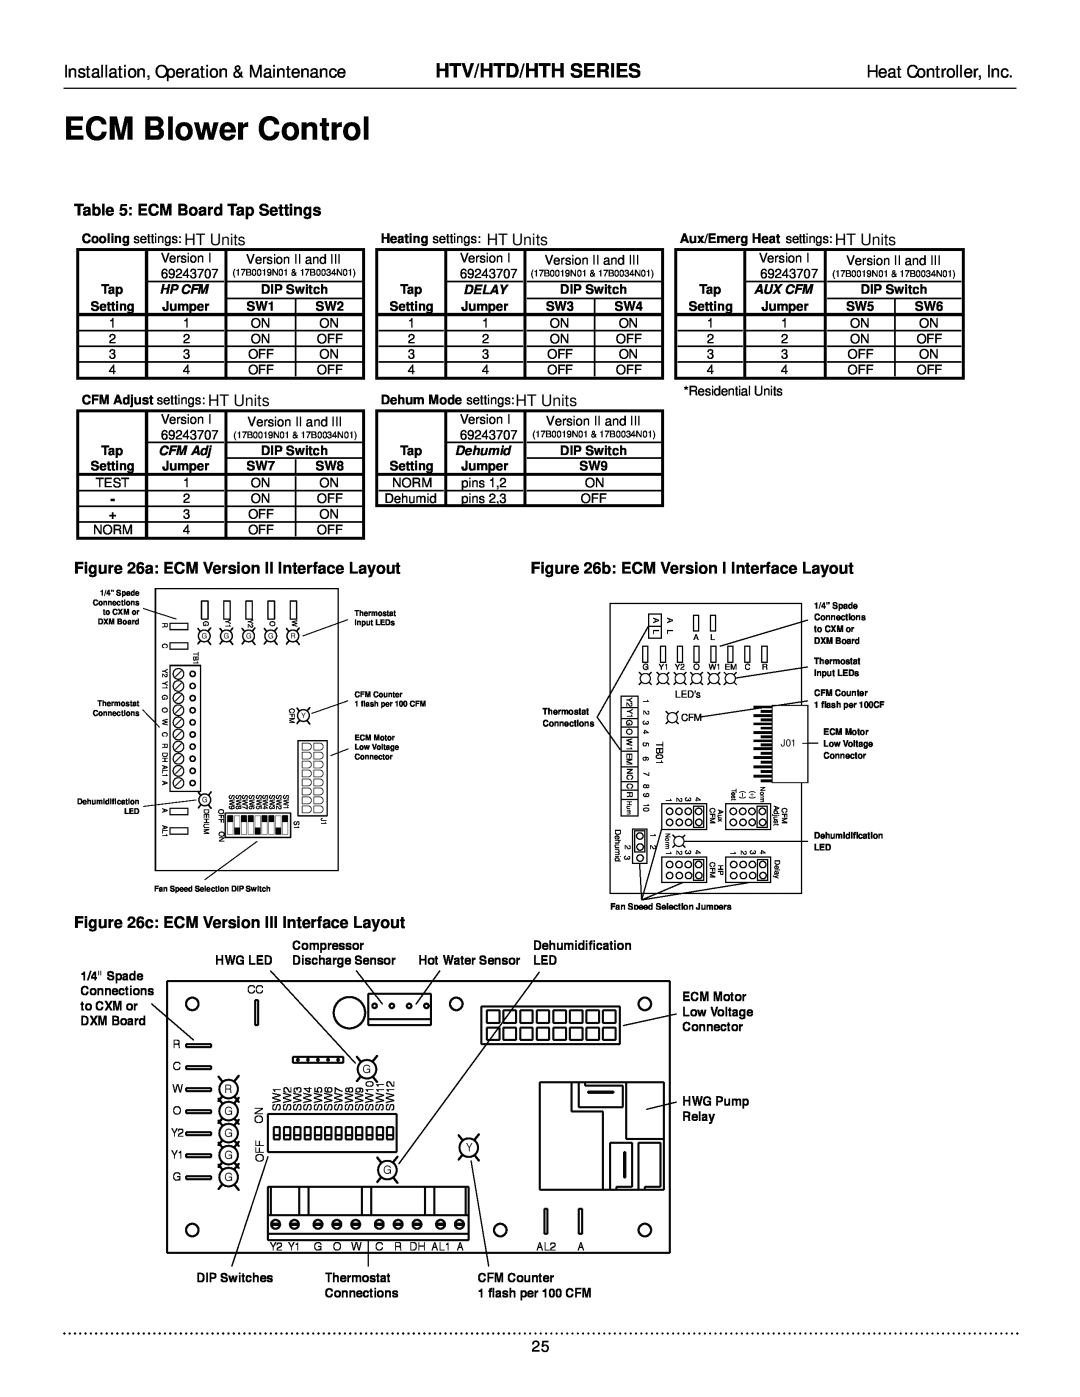 Heat Controller HTH ECM Blower Control, Htv/Htd/Hth Series, Installation, Operation & Maintenance, Heat Controller, Inc 